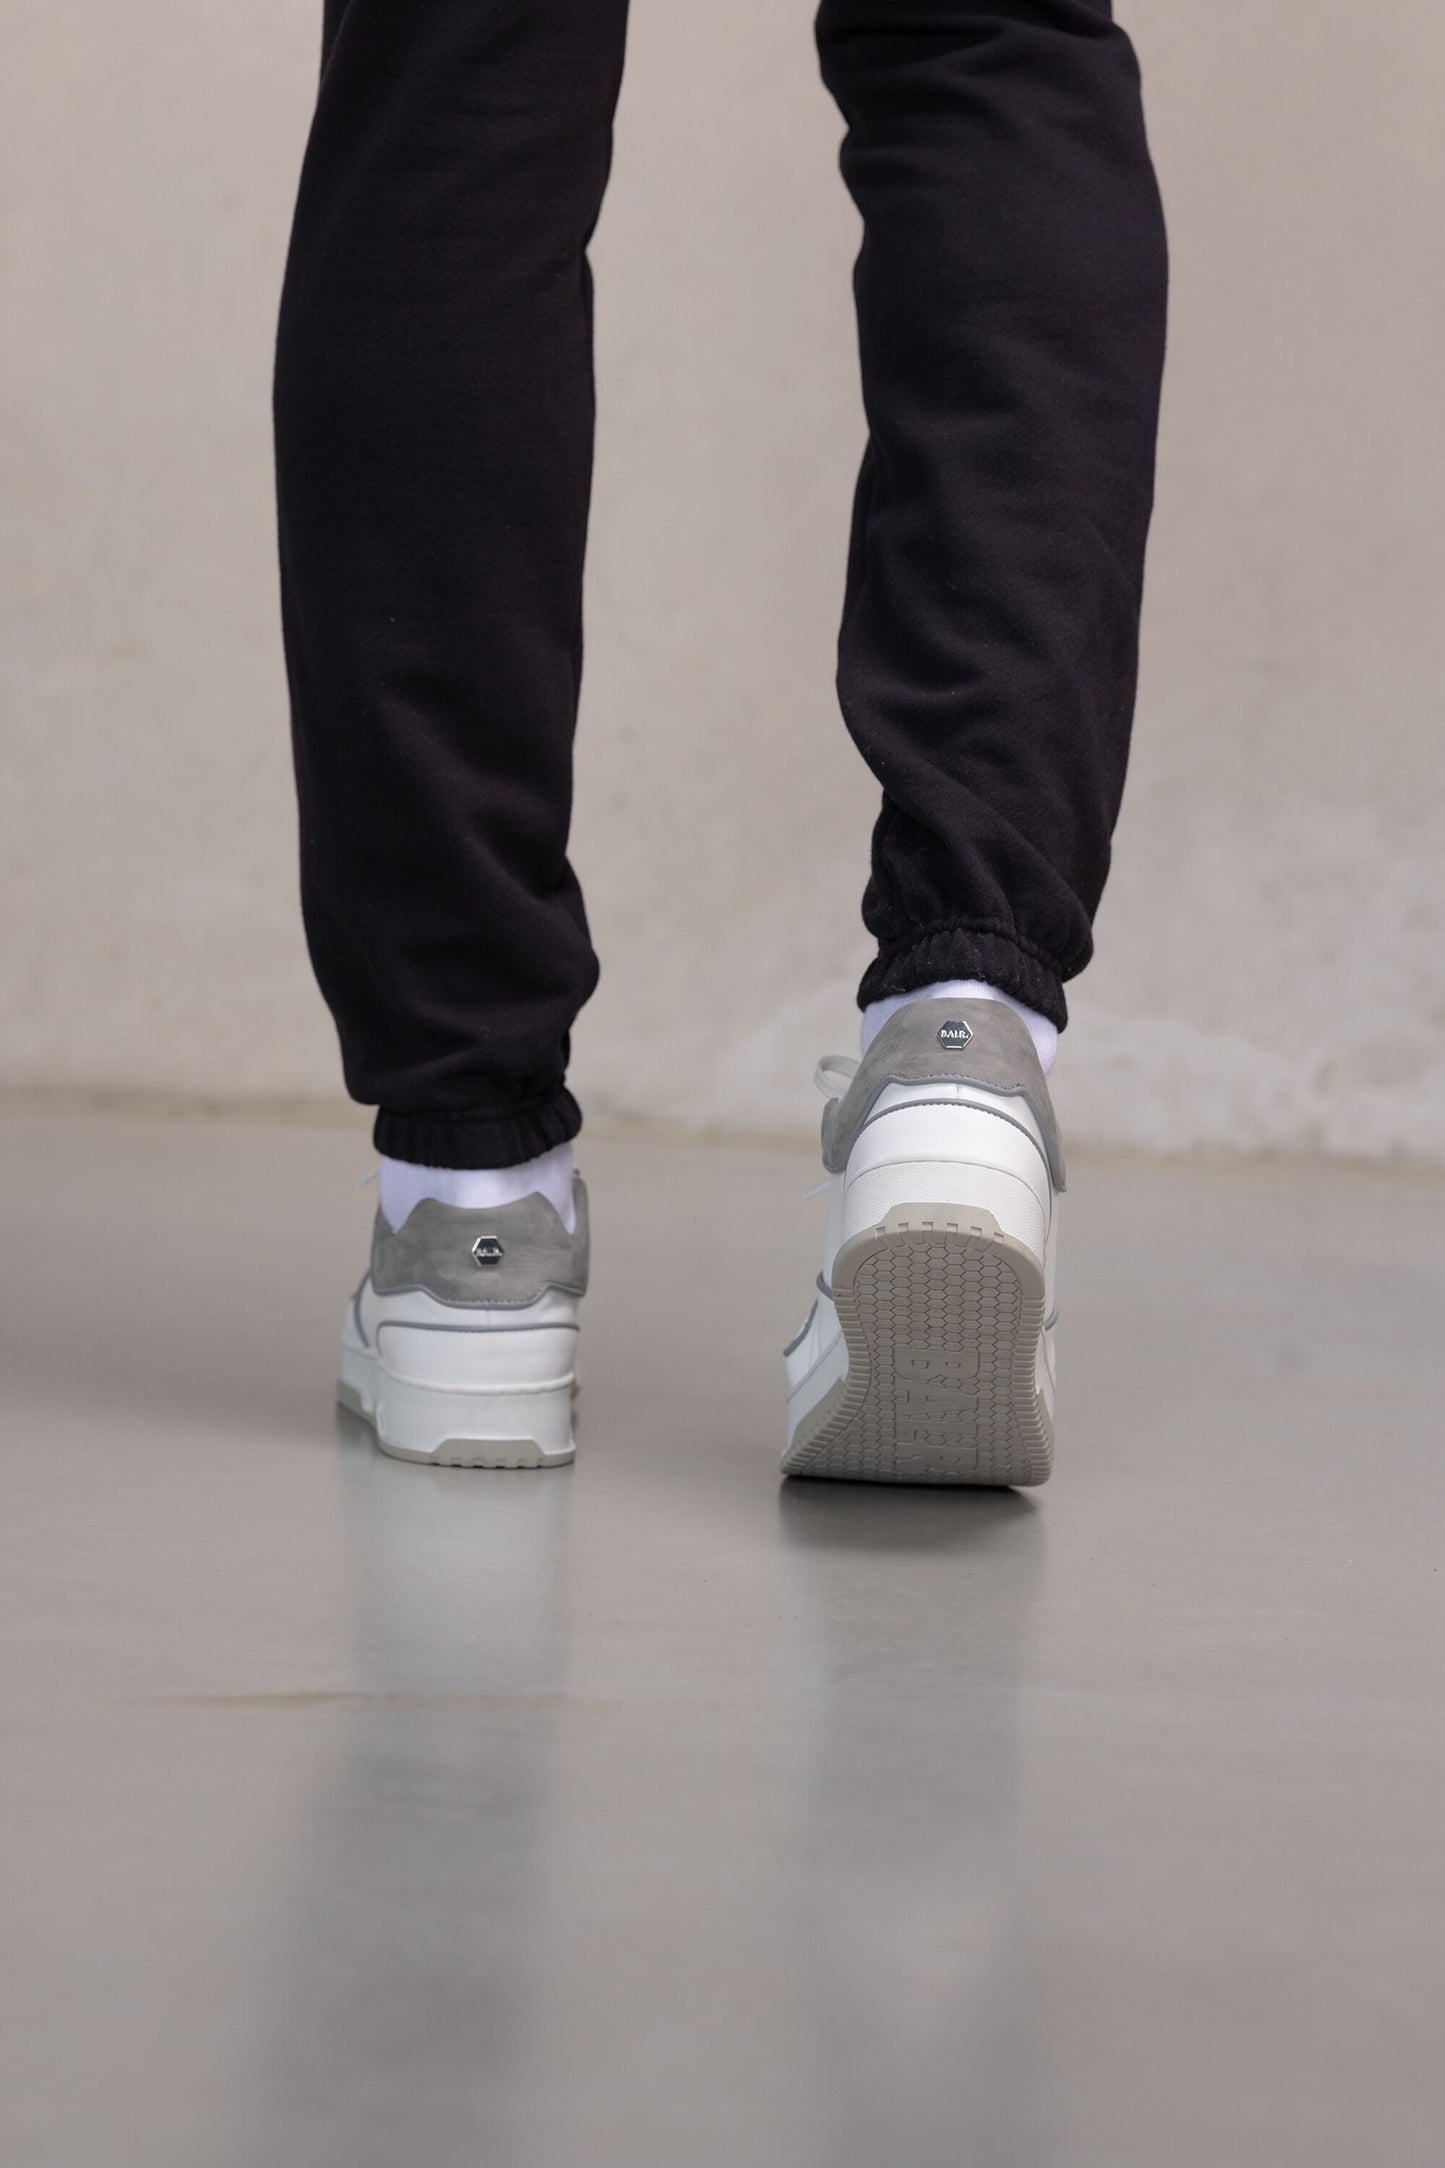 Club B Classic Sneaker Contrast White/Grey